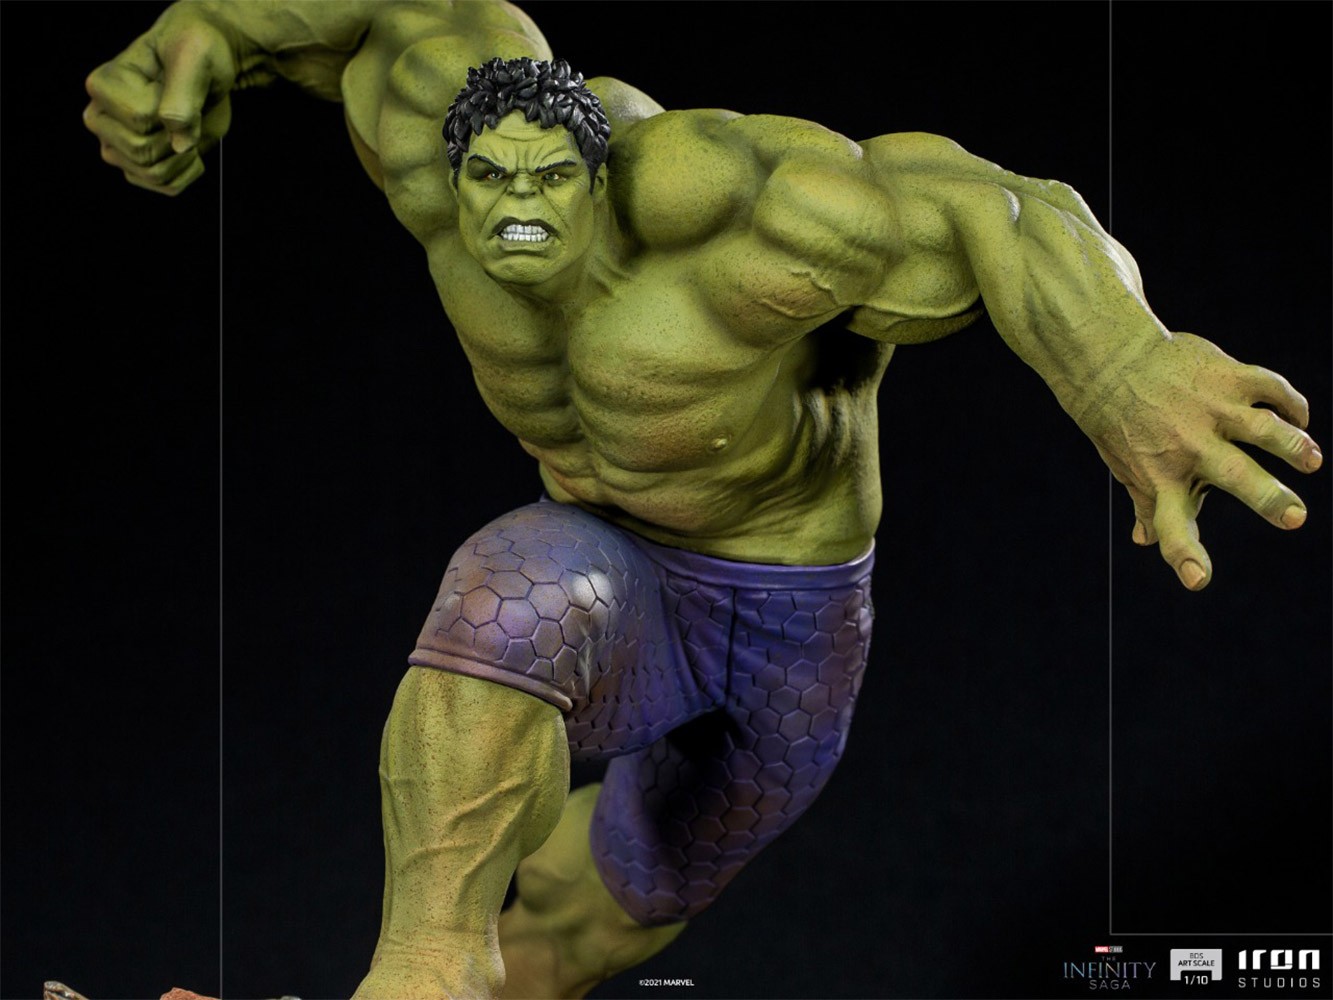 Hulk- Prototype Shown